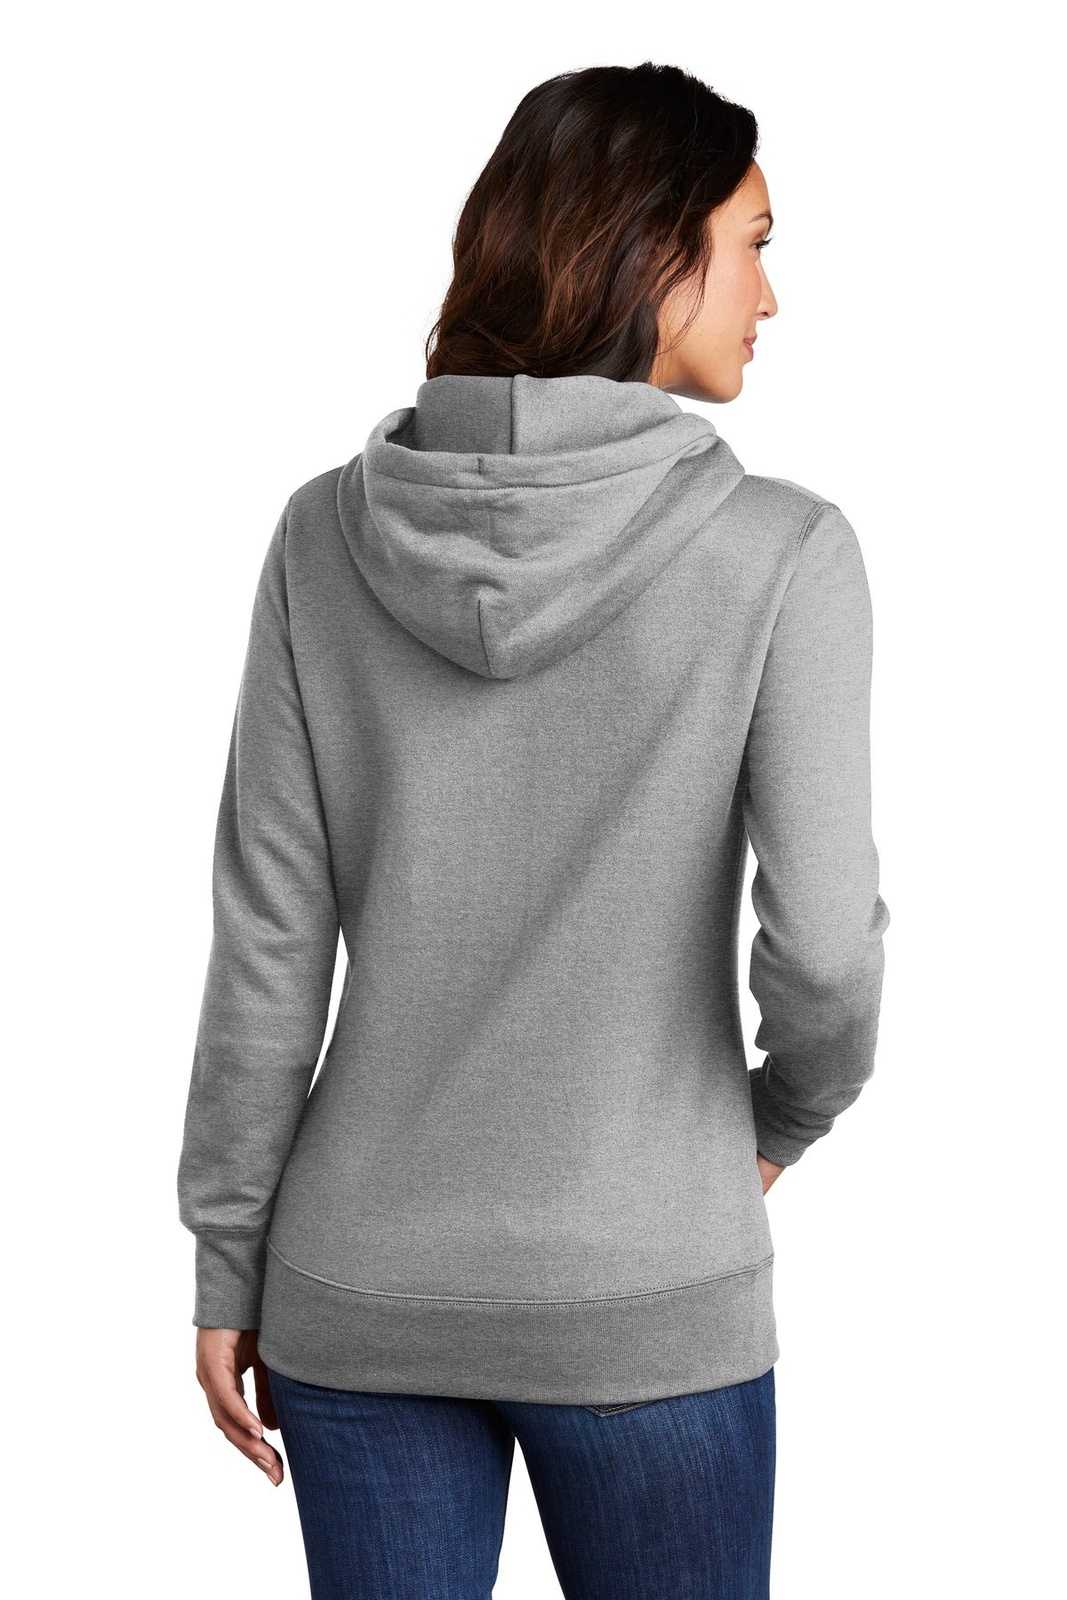 Port &amp; Company LPC78H Ladies Core Fleece Pullover Hooded Sweatshirt - Athletic Heather - HIT a Double - 2